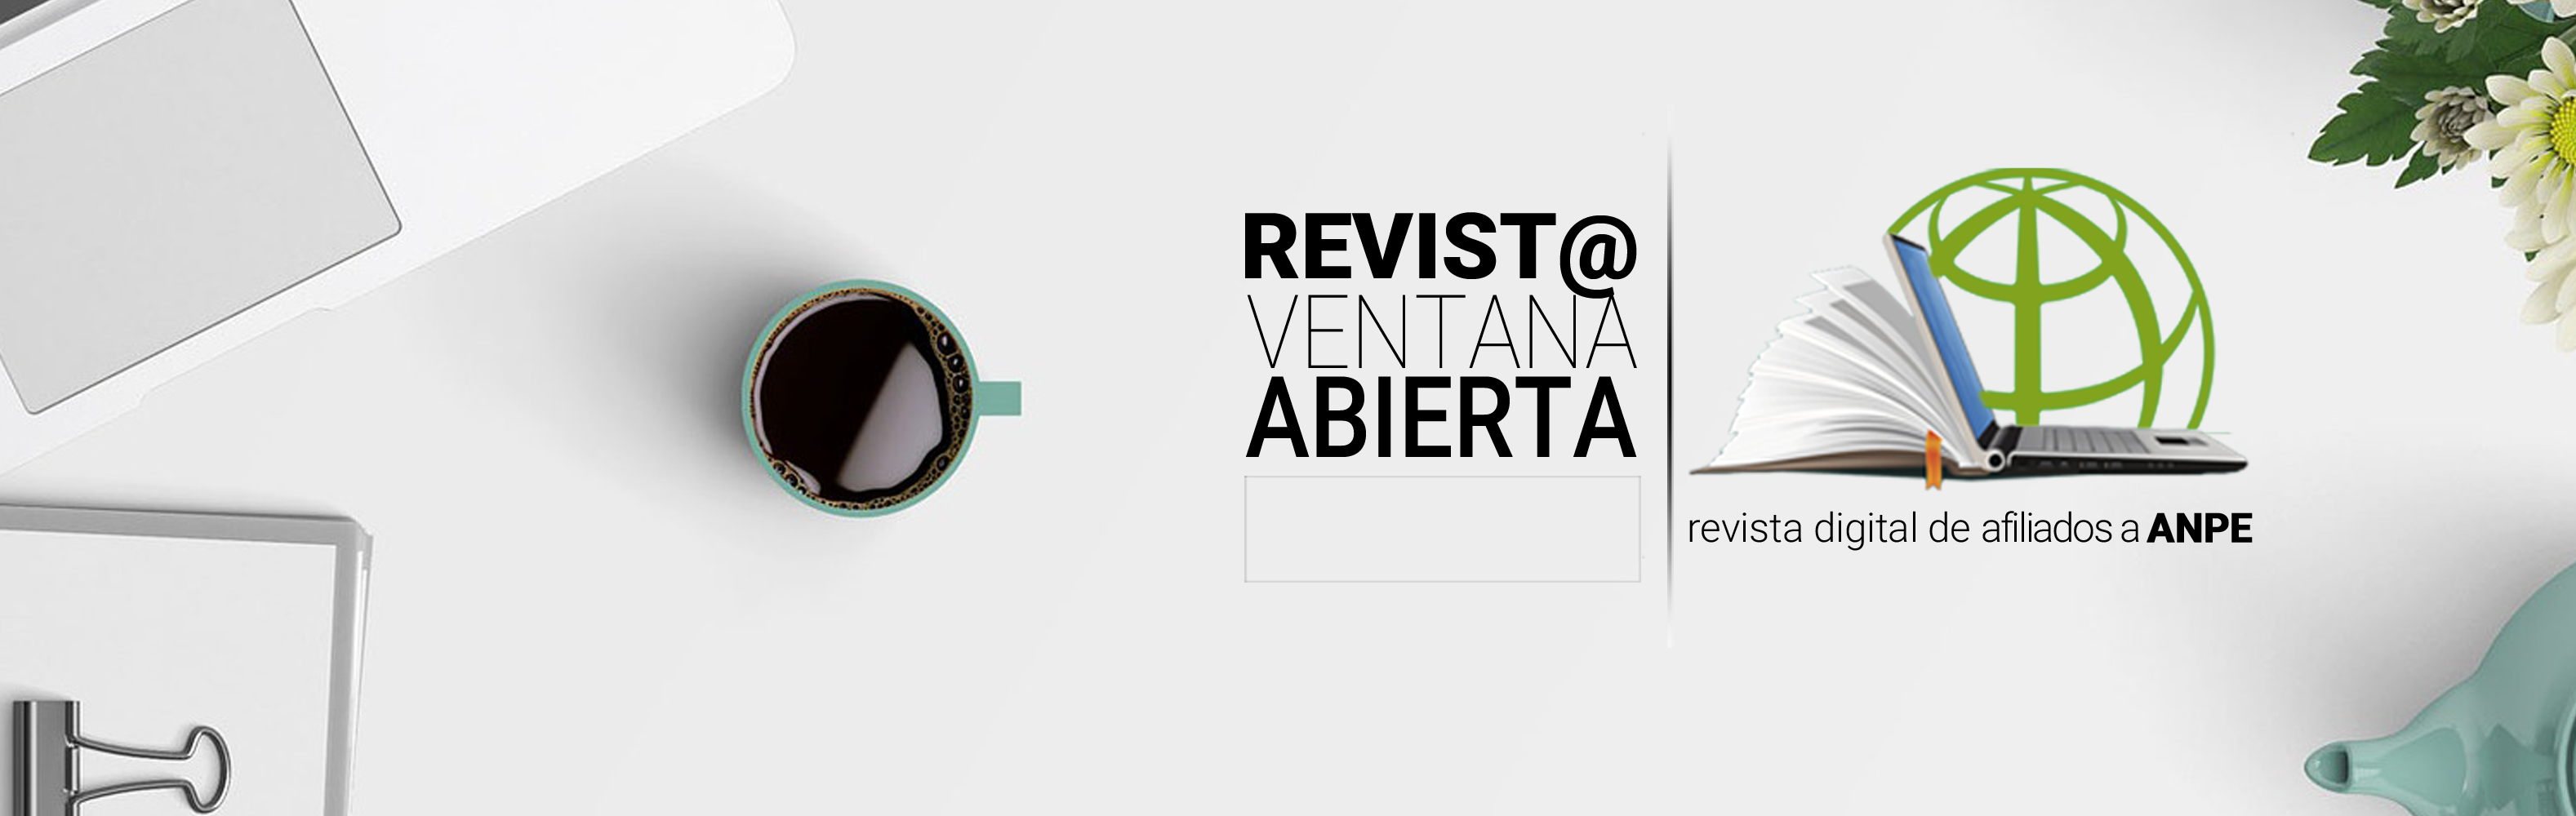 Revista digital Ventana Abierta